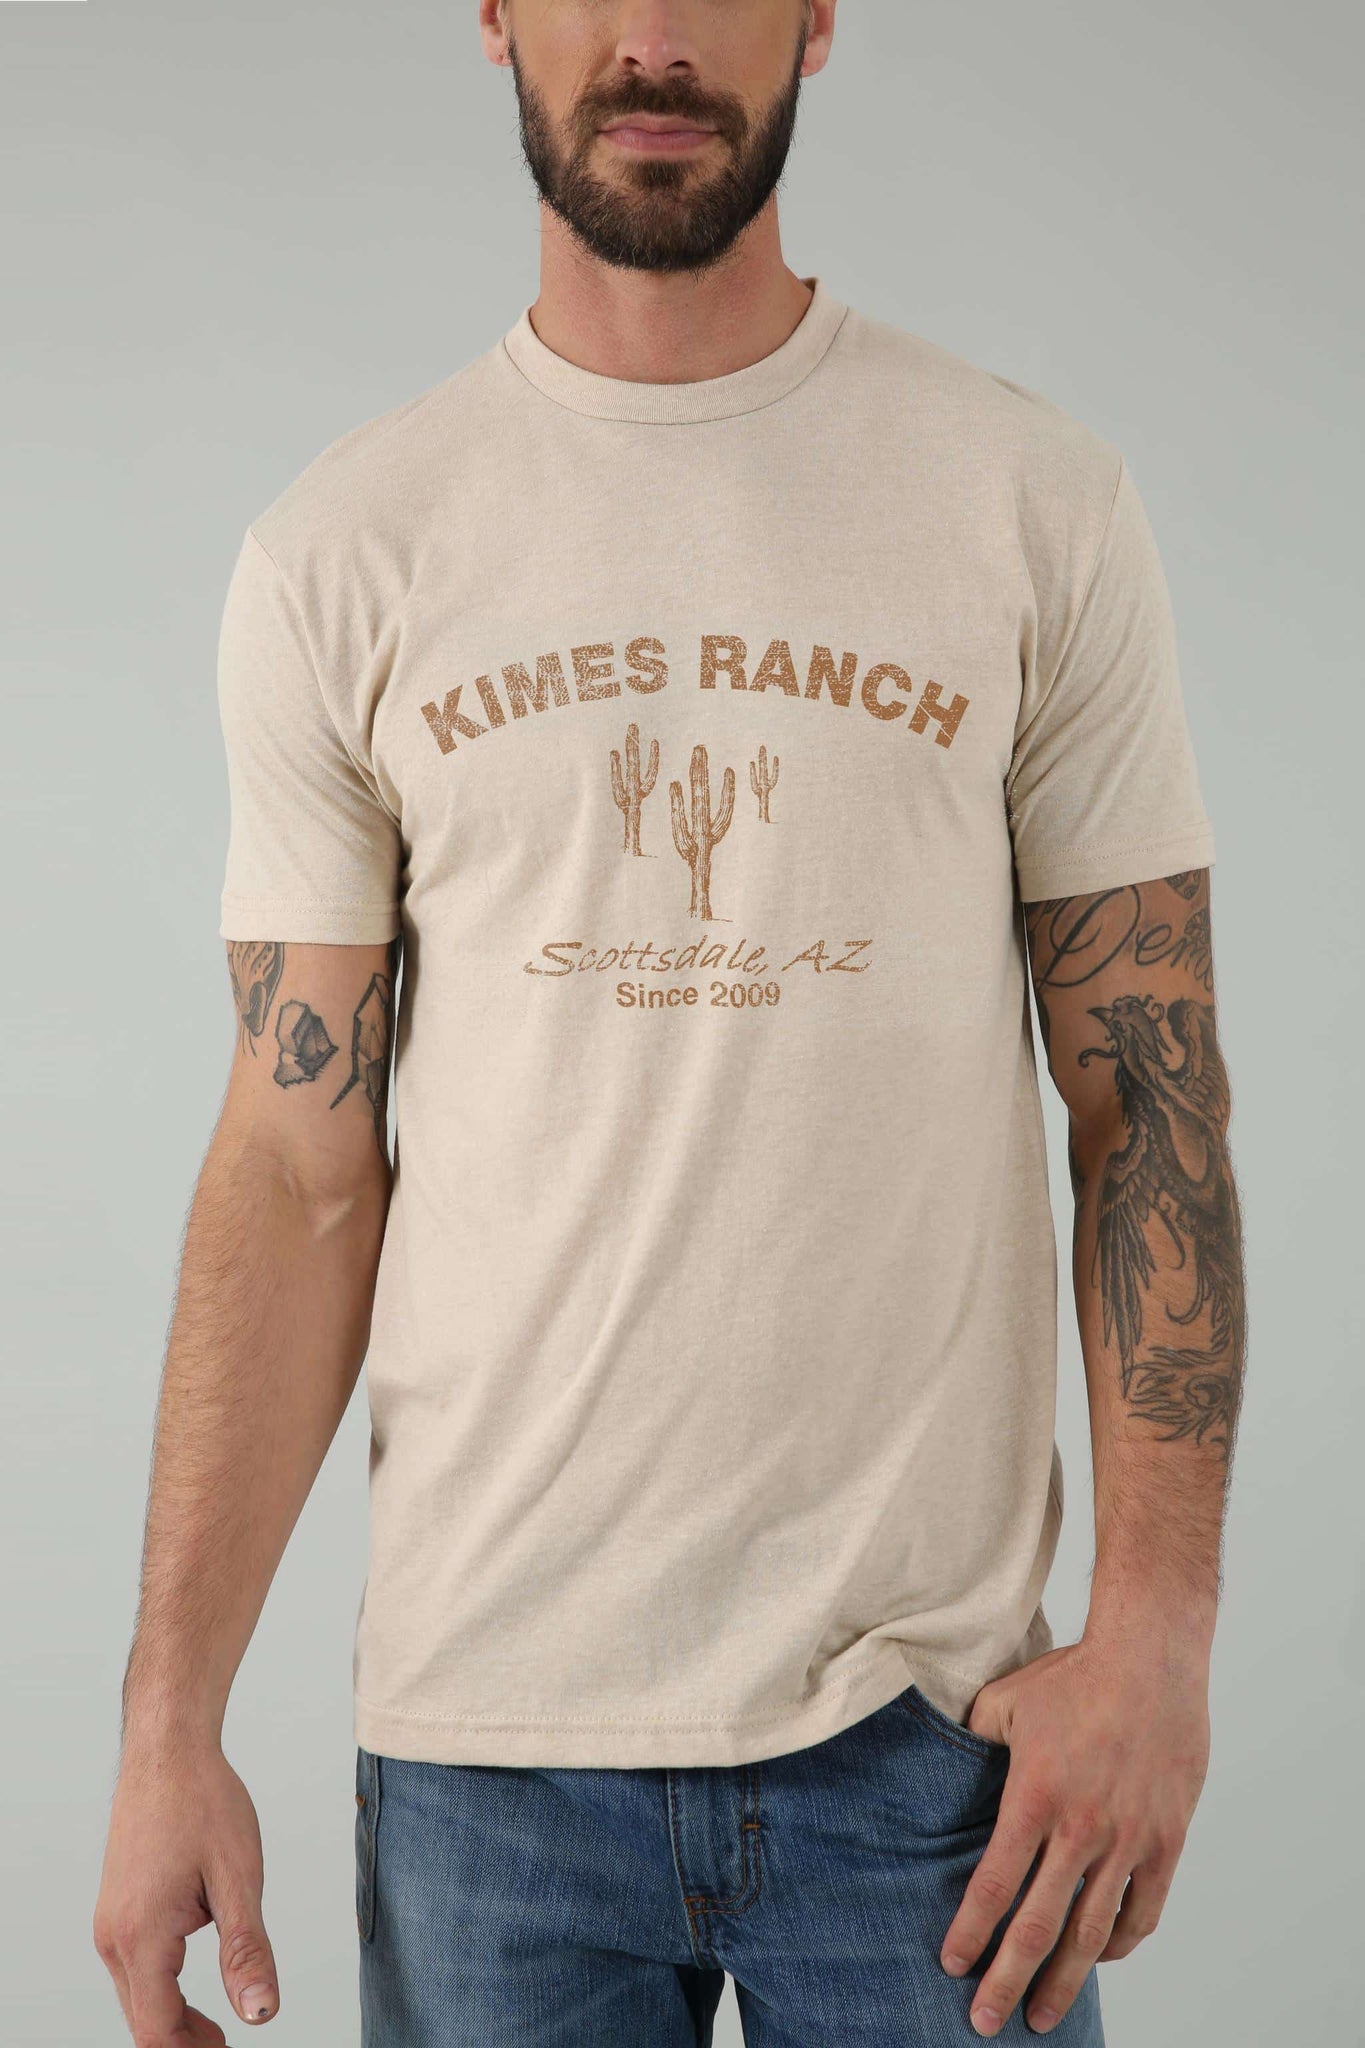 Shirt, Welcome Kimes Ranch